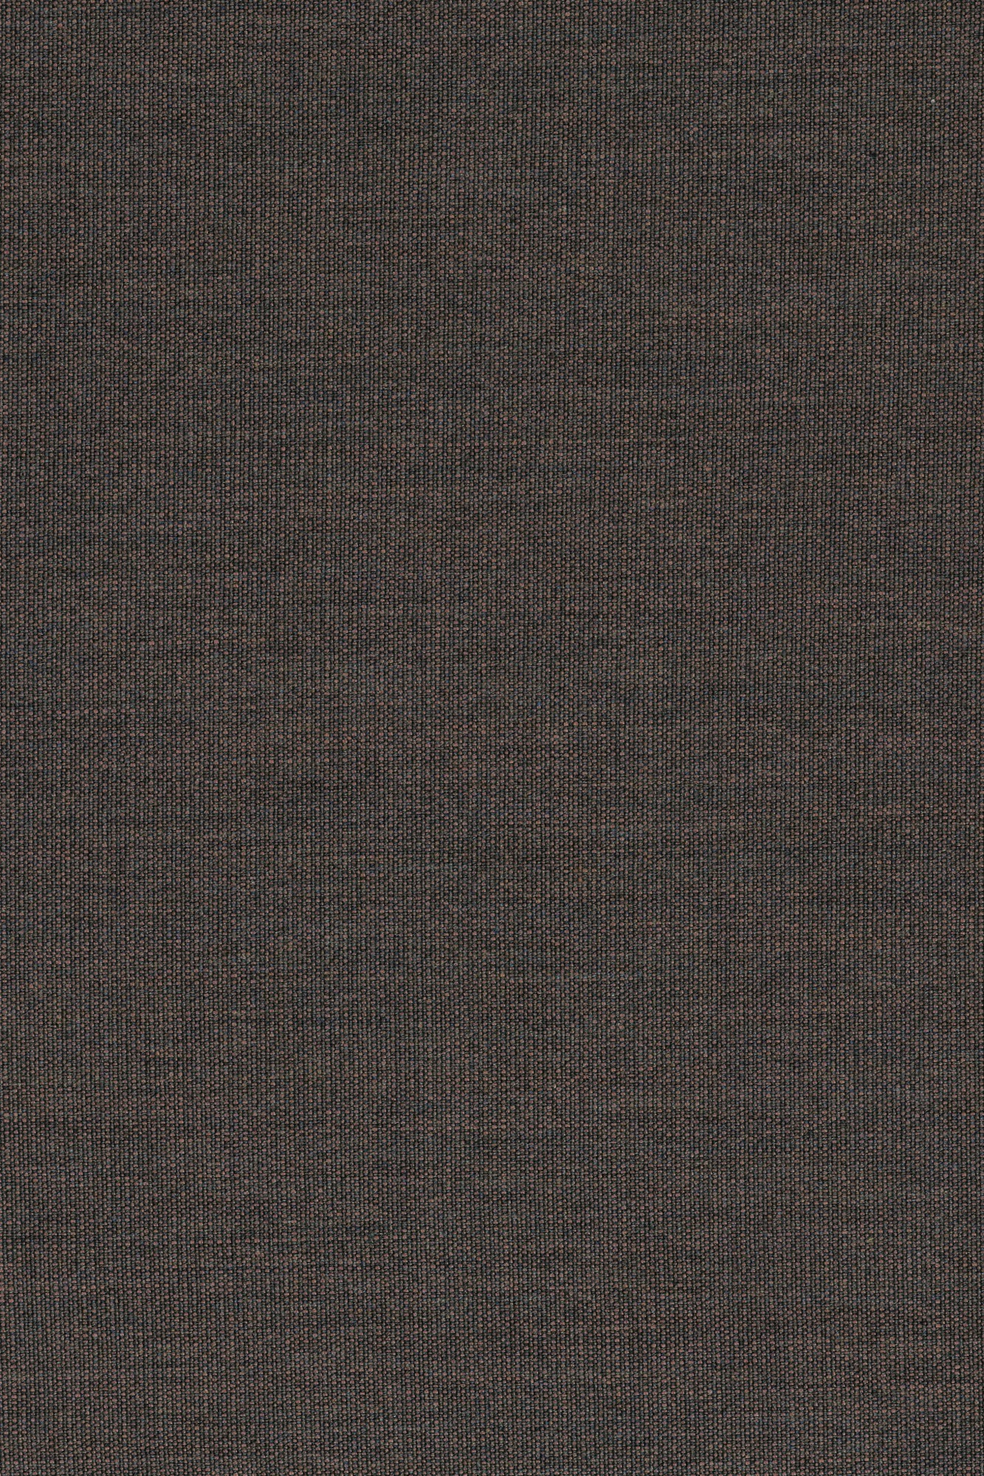 Fabric sample Canvas 2 674 grey